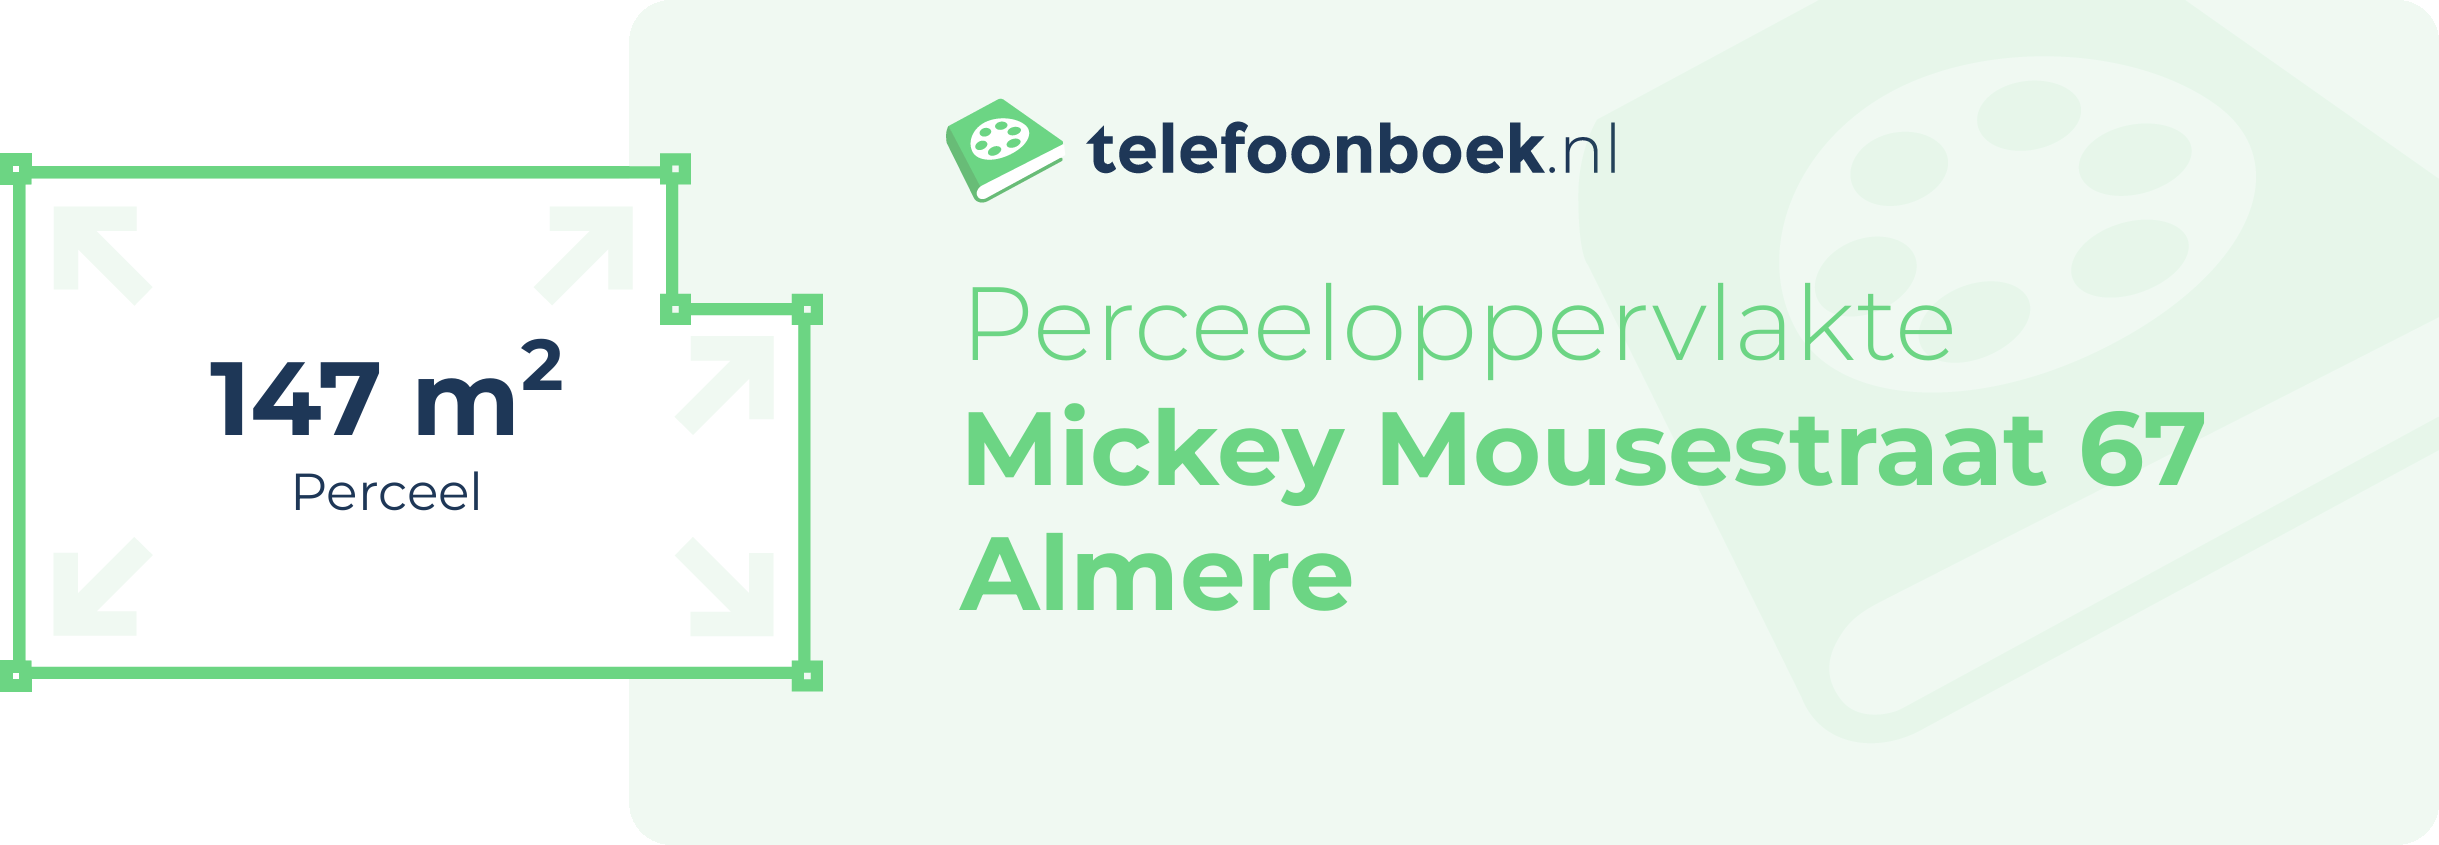 Perceeloppervlakte Mickey Mousestraat 67 Almere